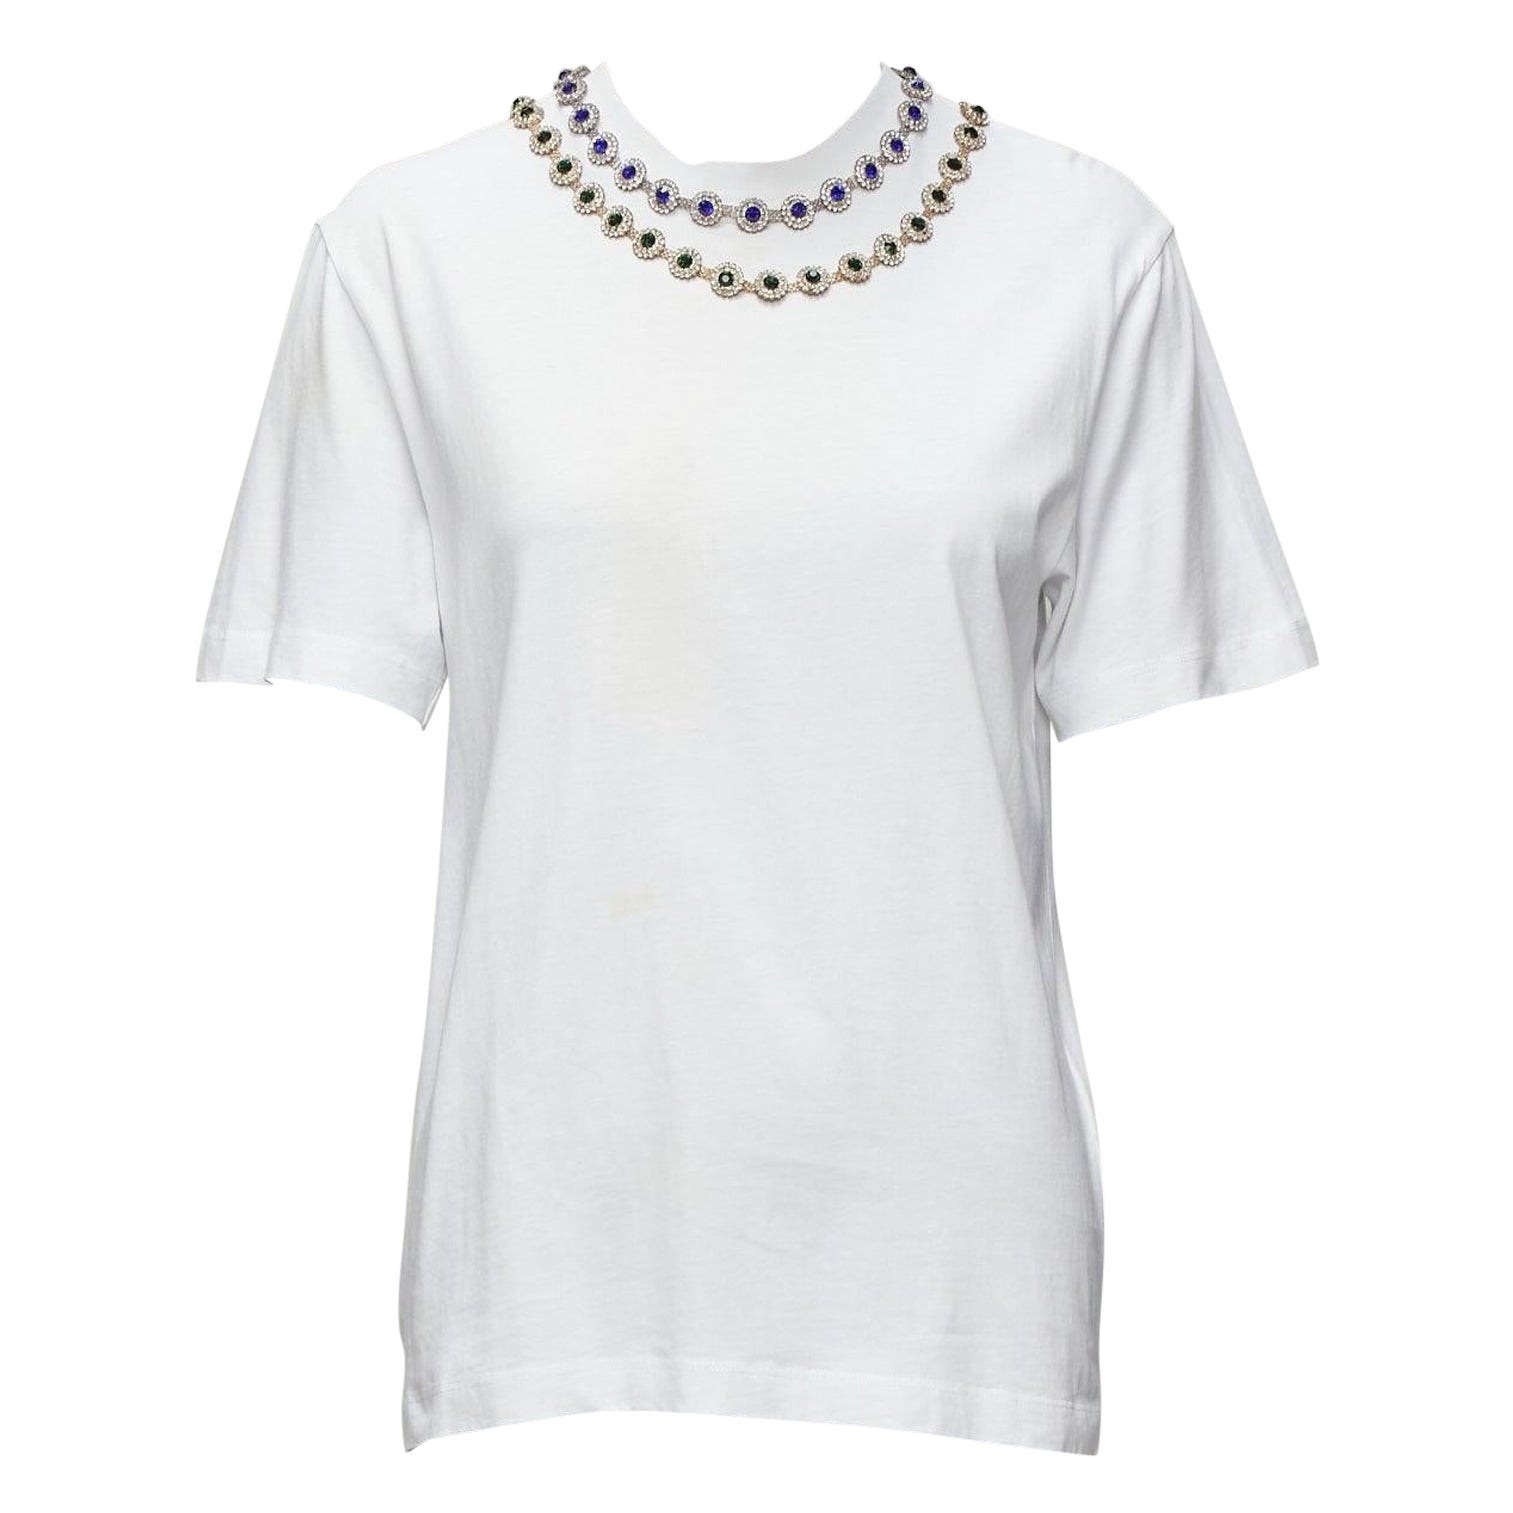 CHRISTOPHER KANE white cotton mixed rhinestone tromp loeil necklace white tshirt For Sale